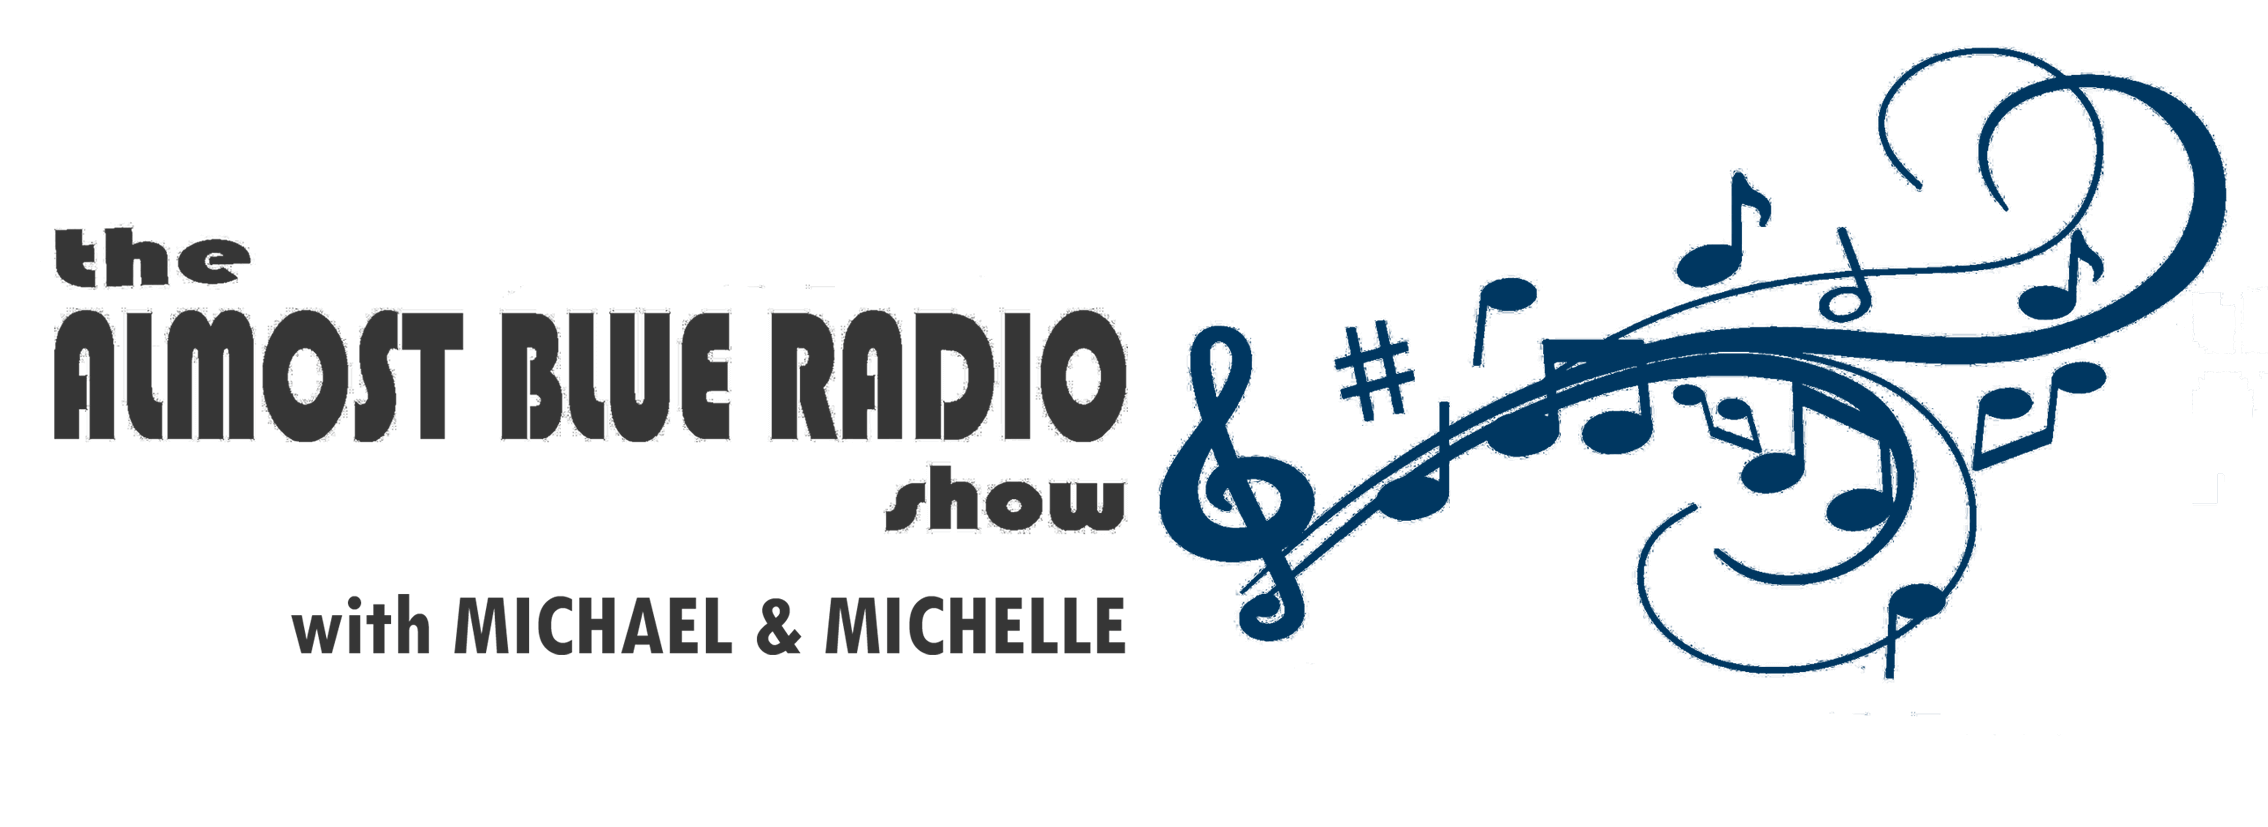 Melbourne Radio Station